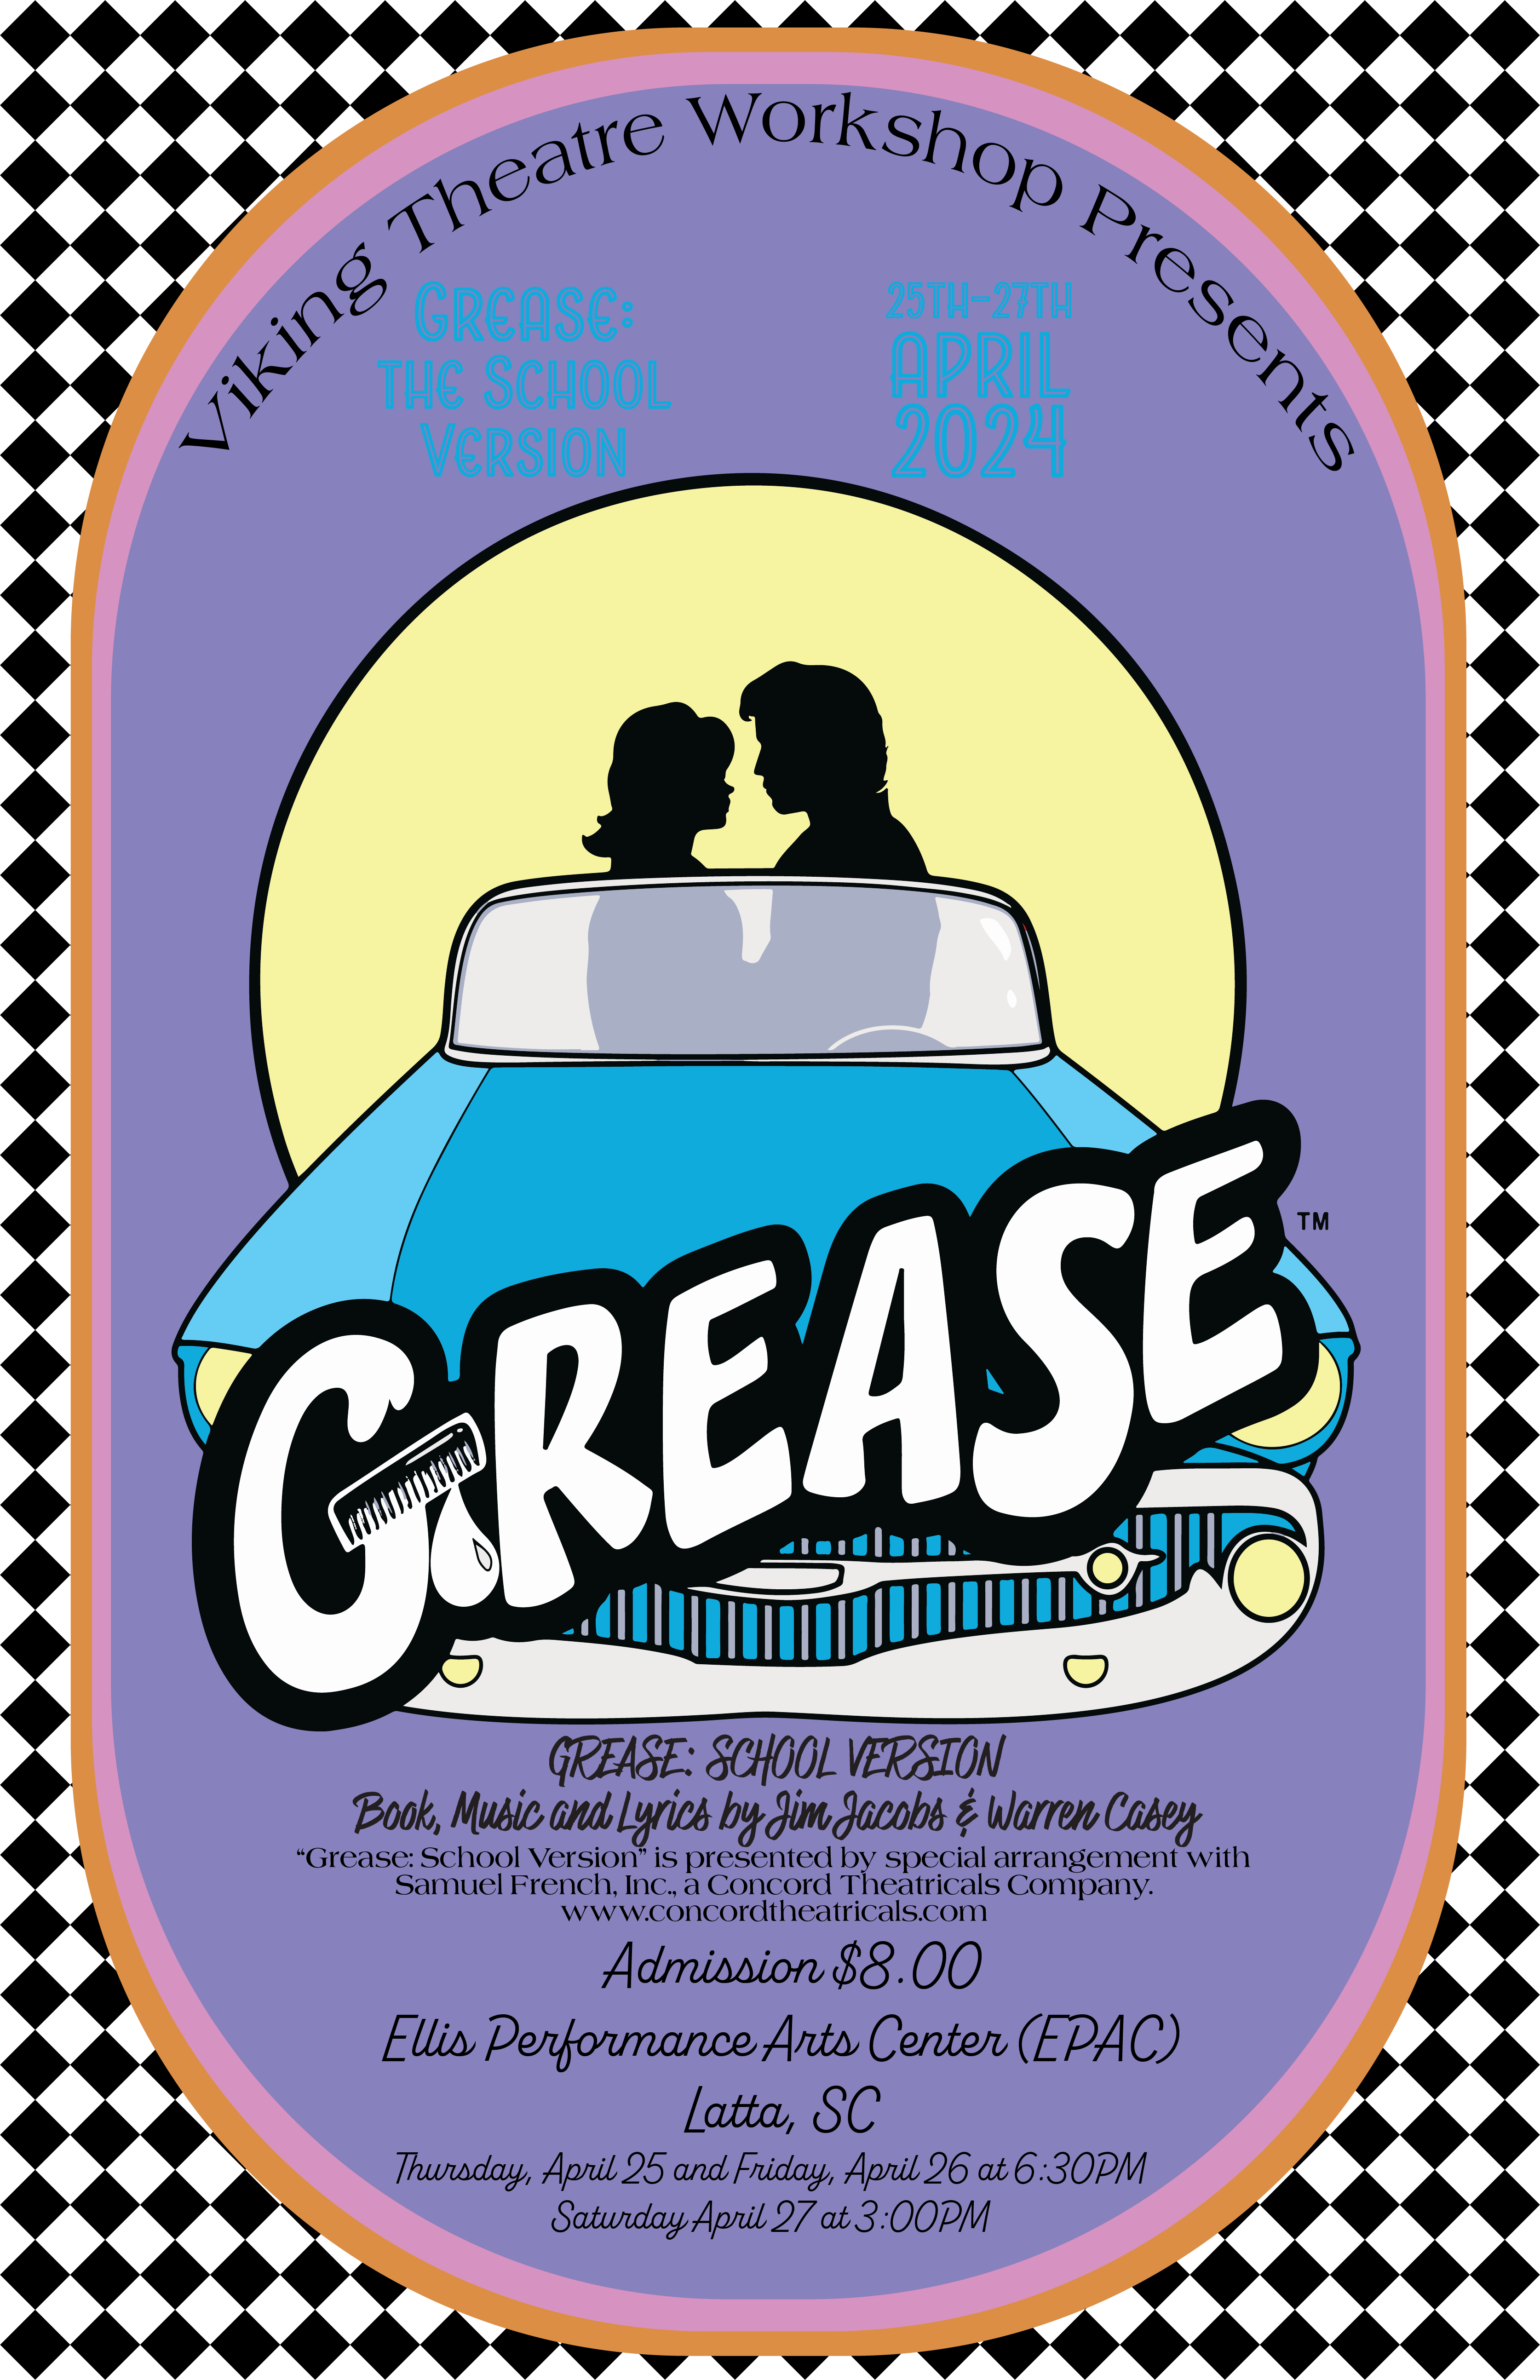 Grease: School Version Poster